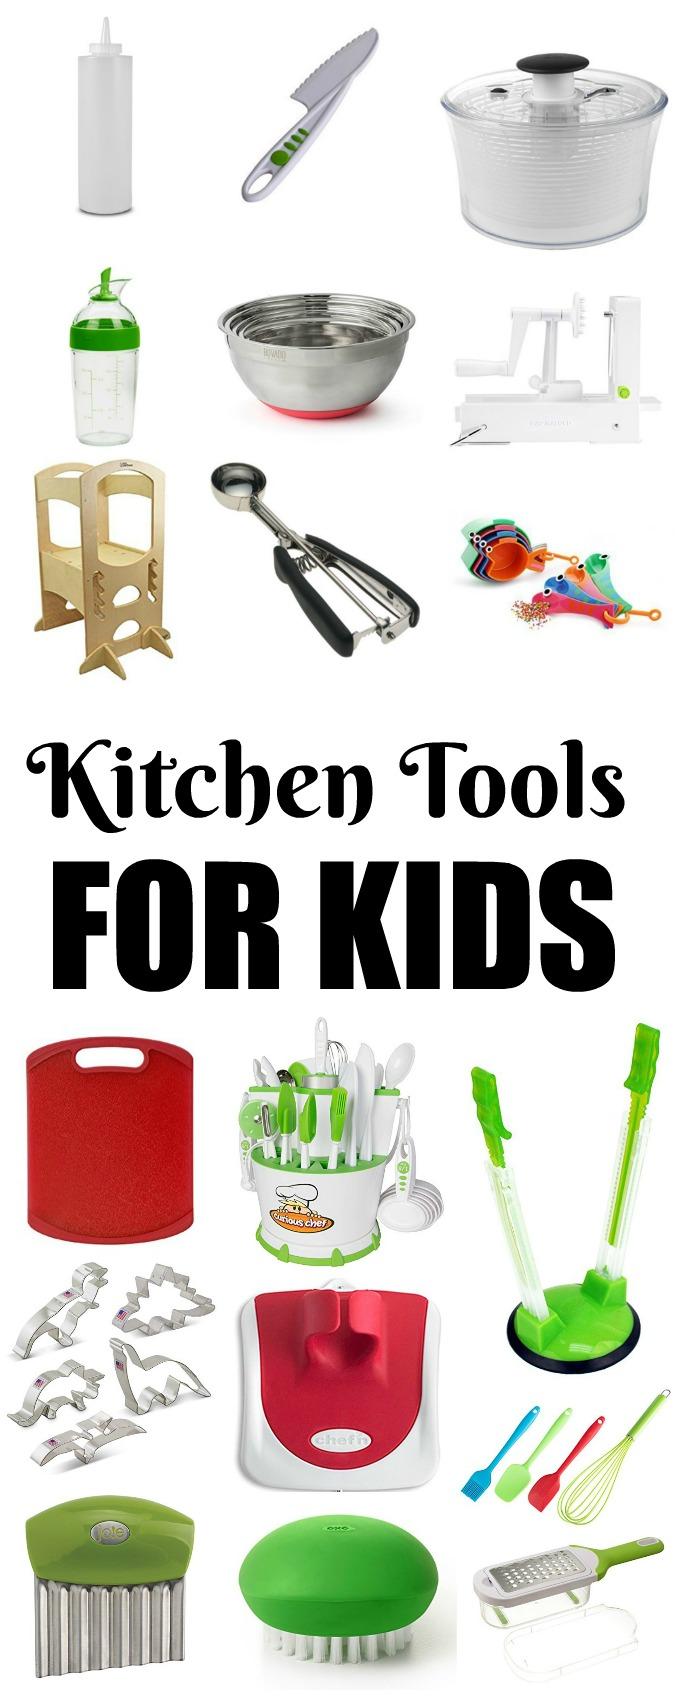 https://www.theleangreenbean.com/wp-content/uploads/2017/11/kitchen-tools-for-kids.jpg